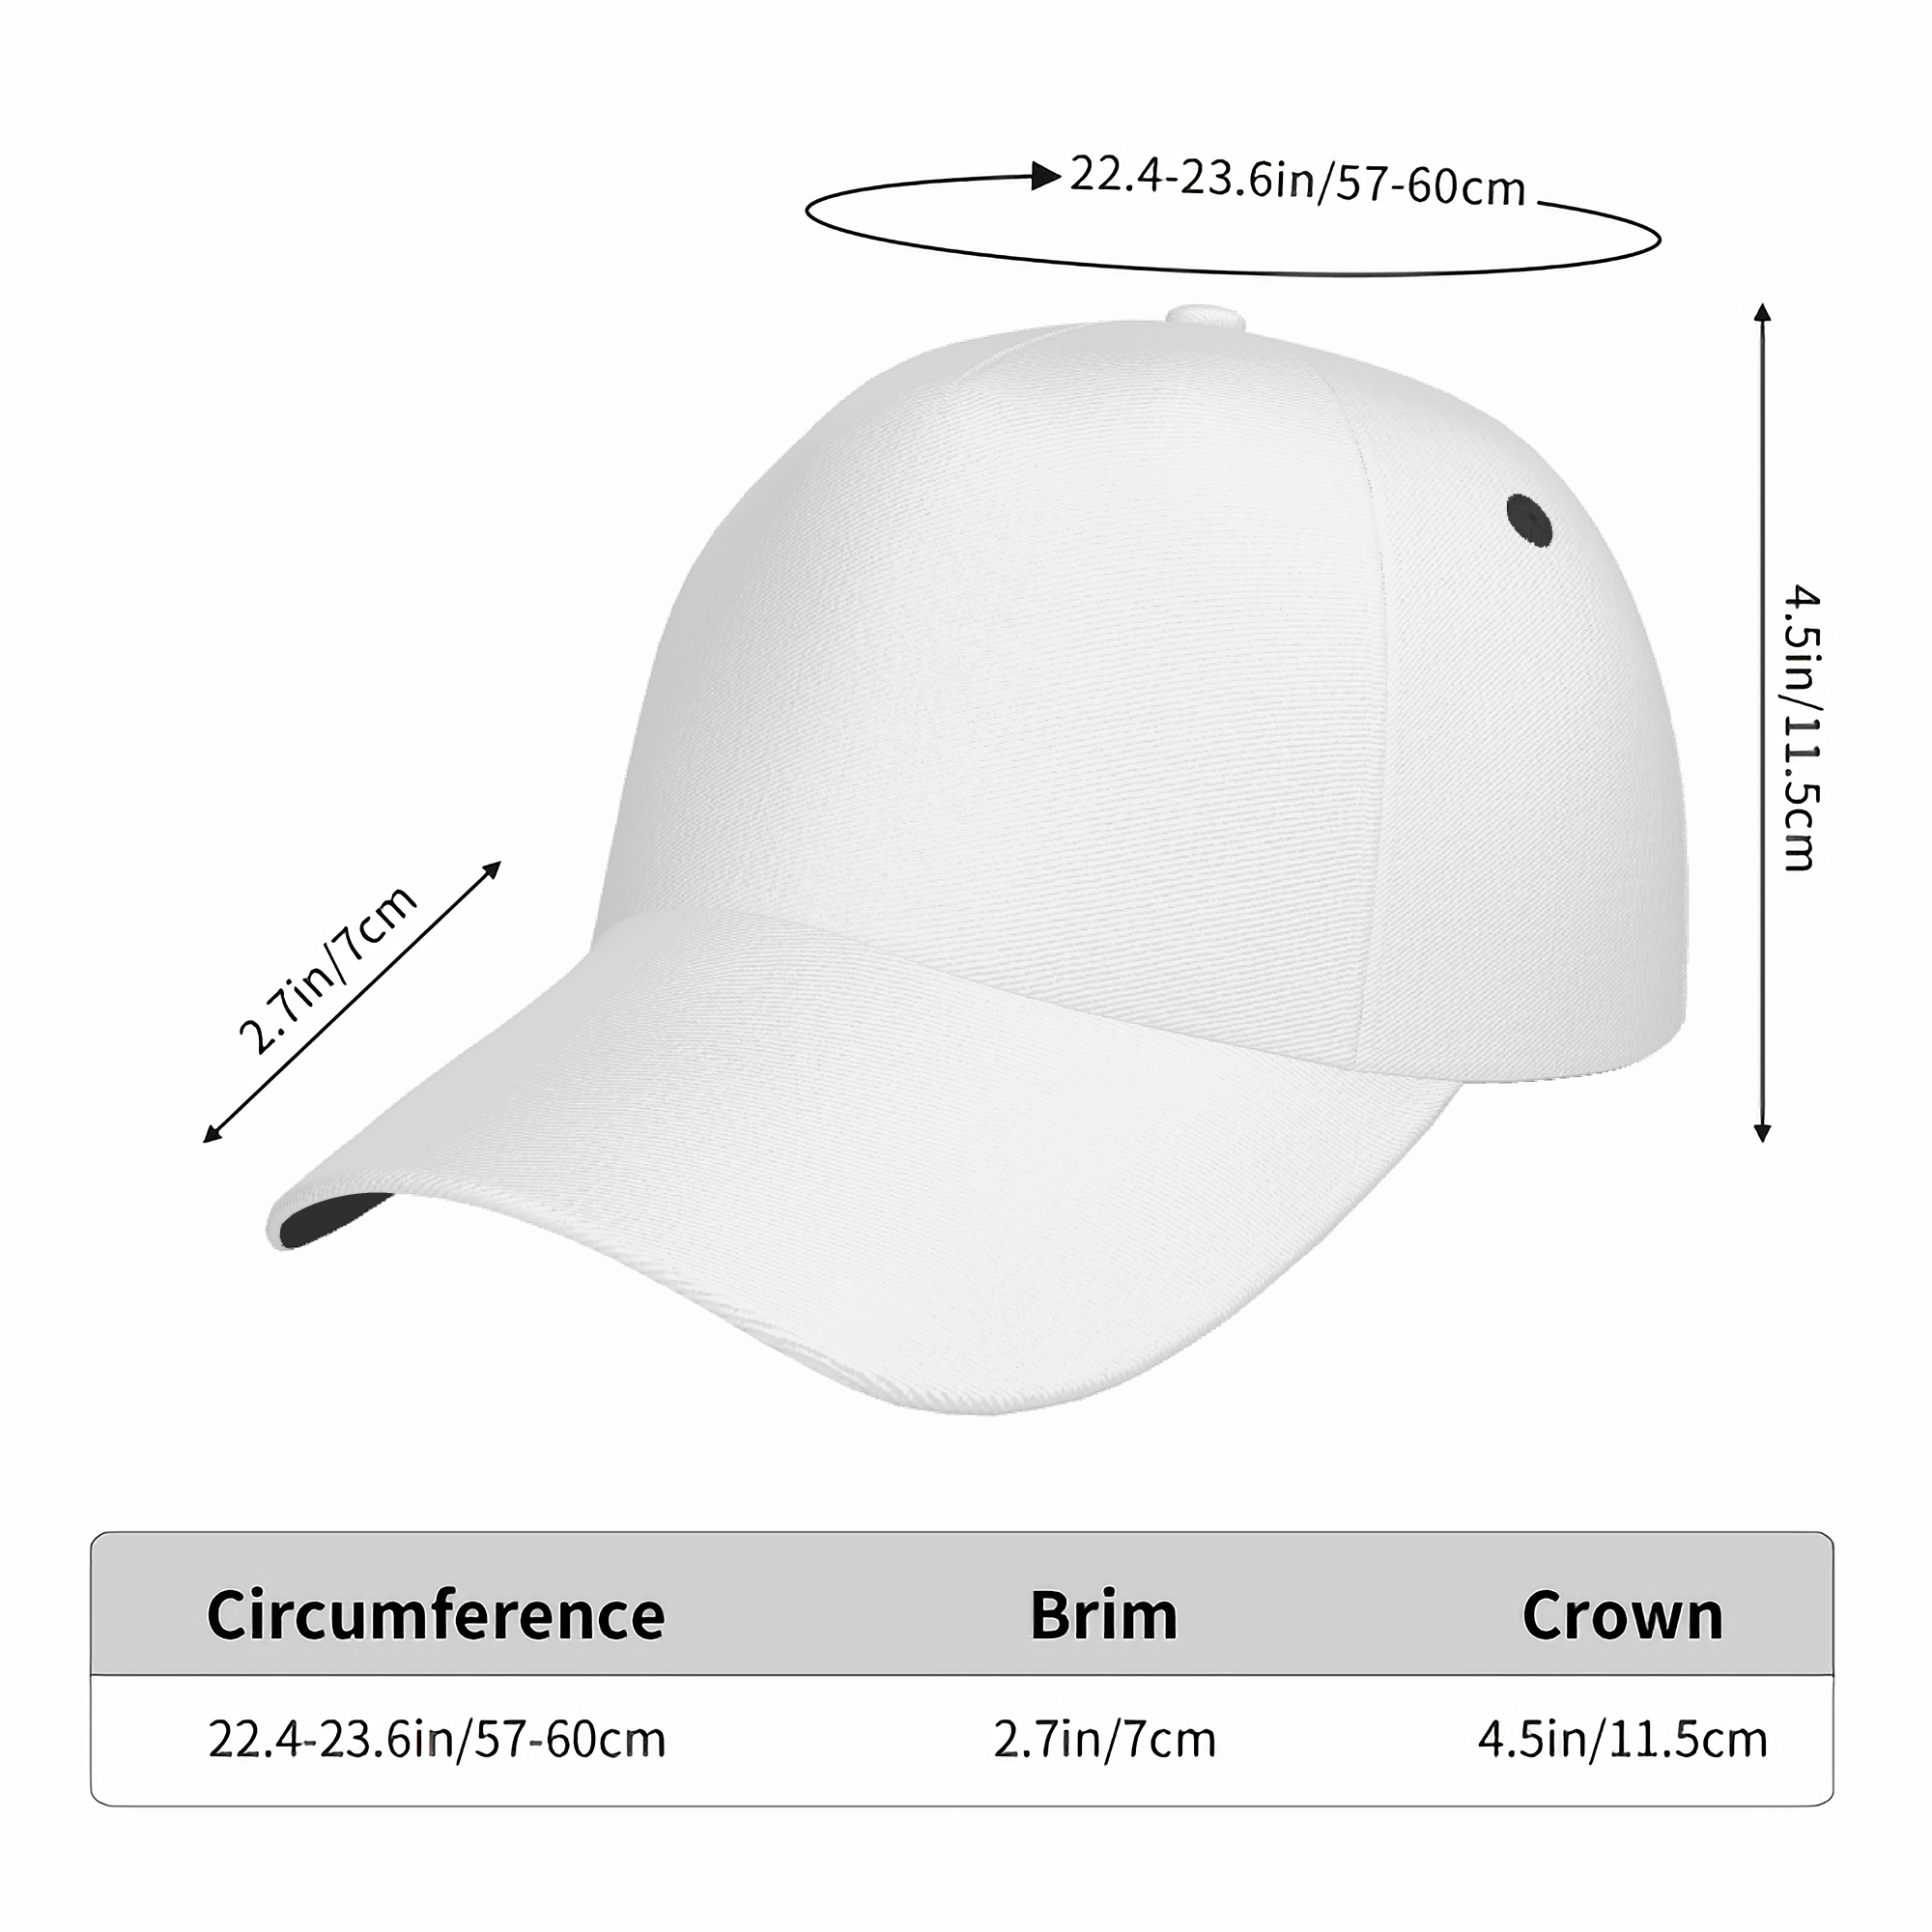 Customizable Curved Brim Baseball Cap | Design Your Own | Shoe Zero